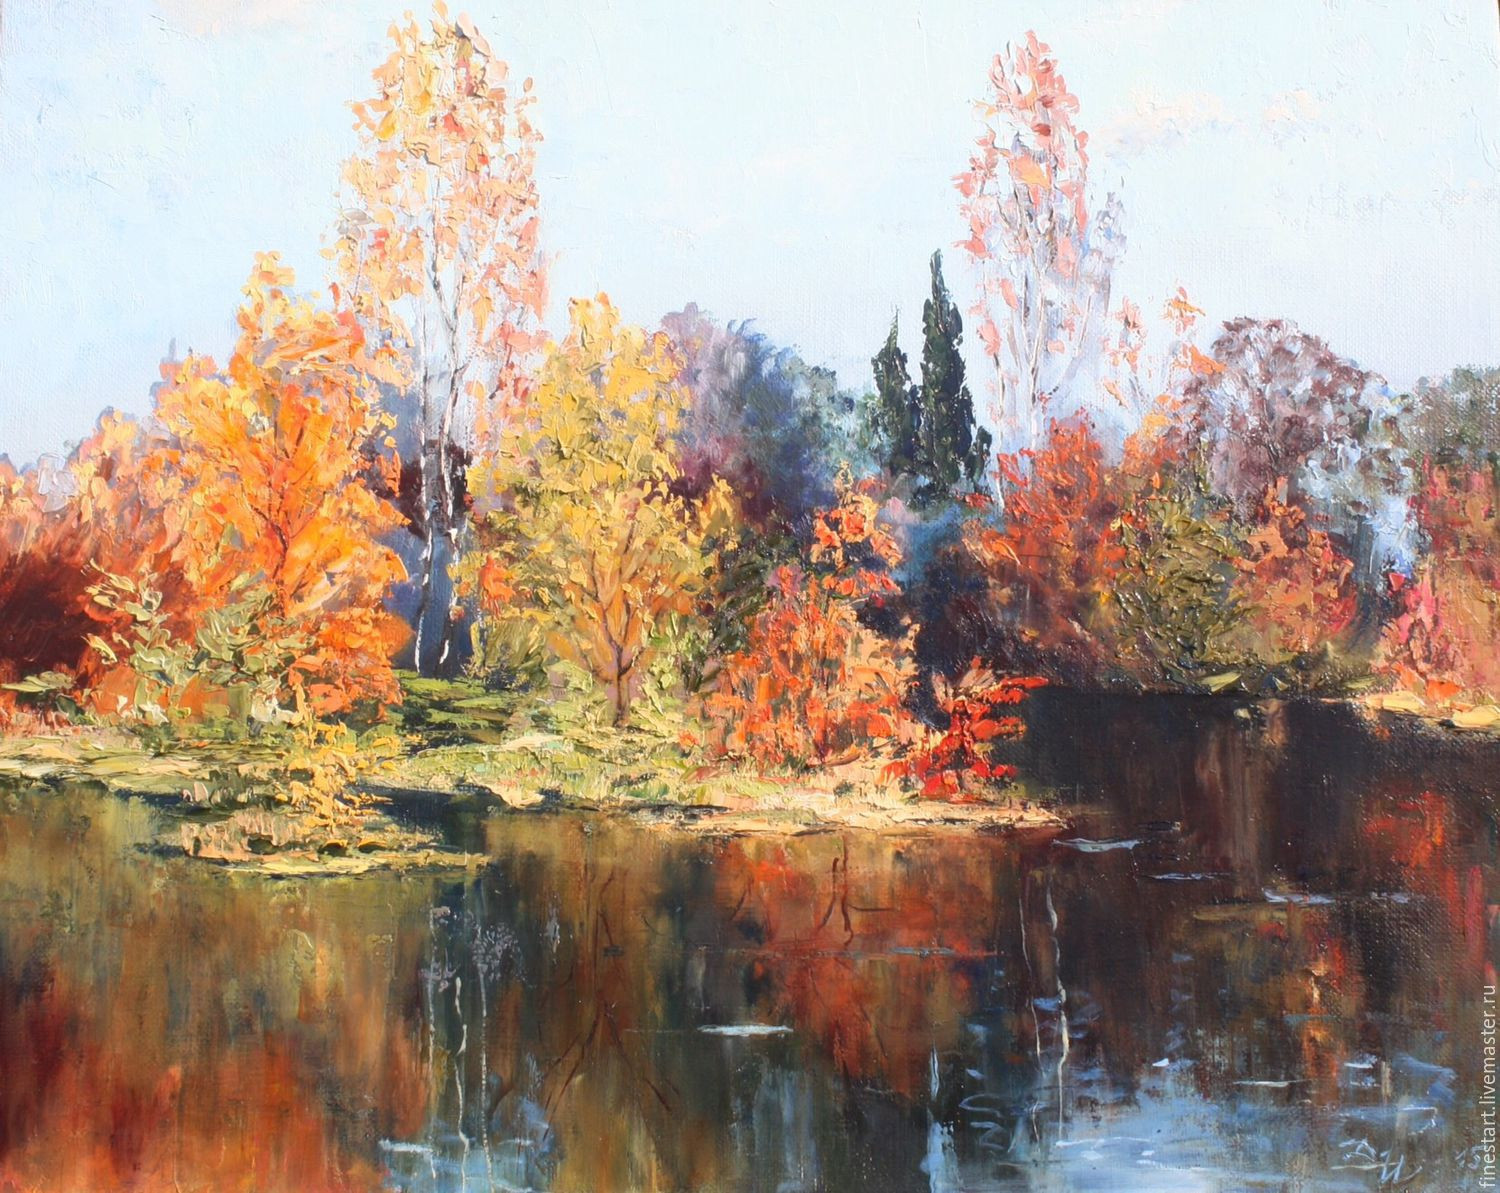 Landscape Oil Paintings Lovely Oil Painting Landscape Autumn Oil On Canvas Impressionism